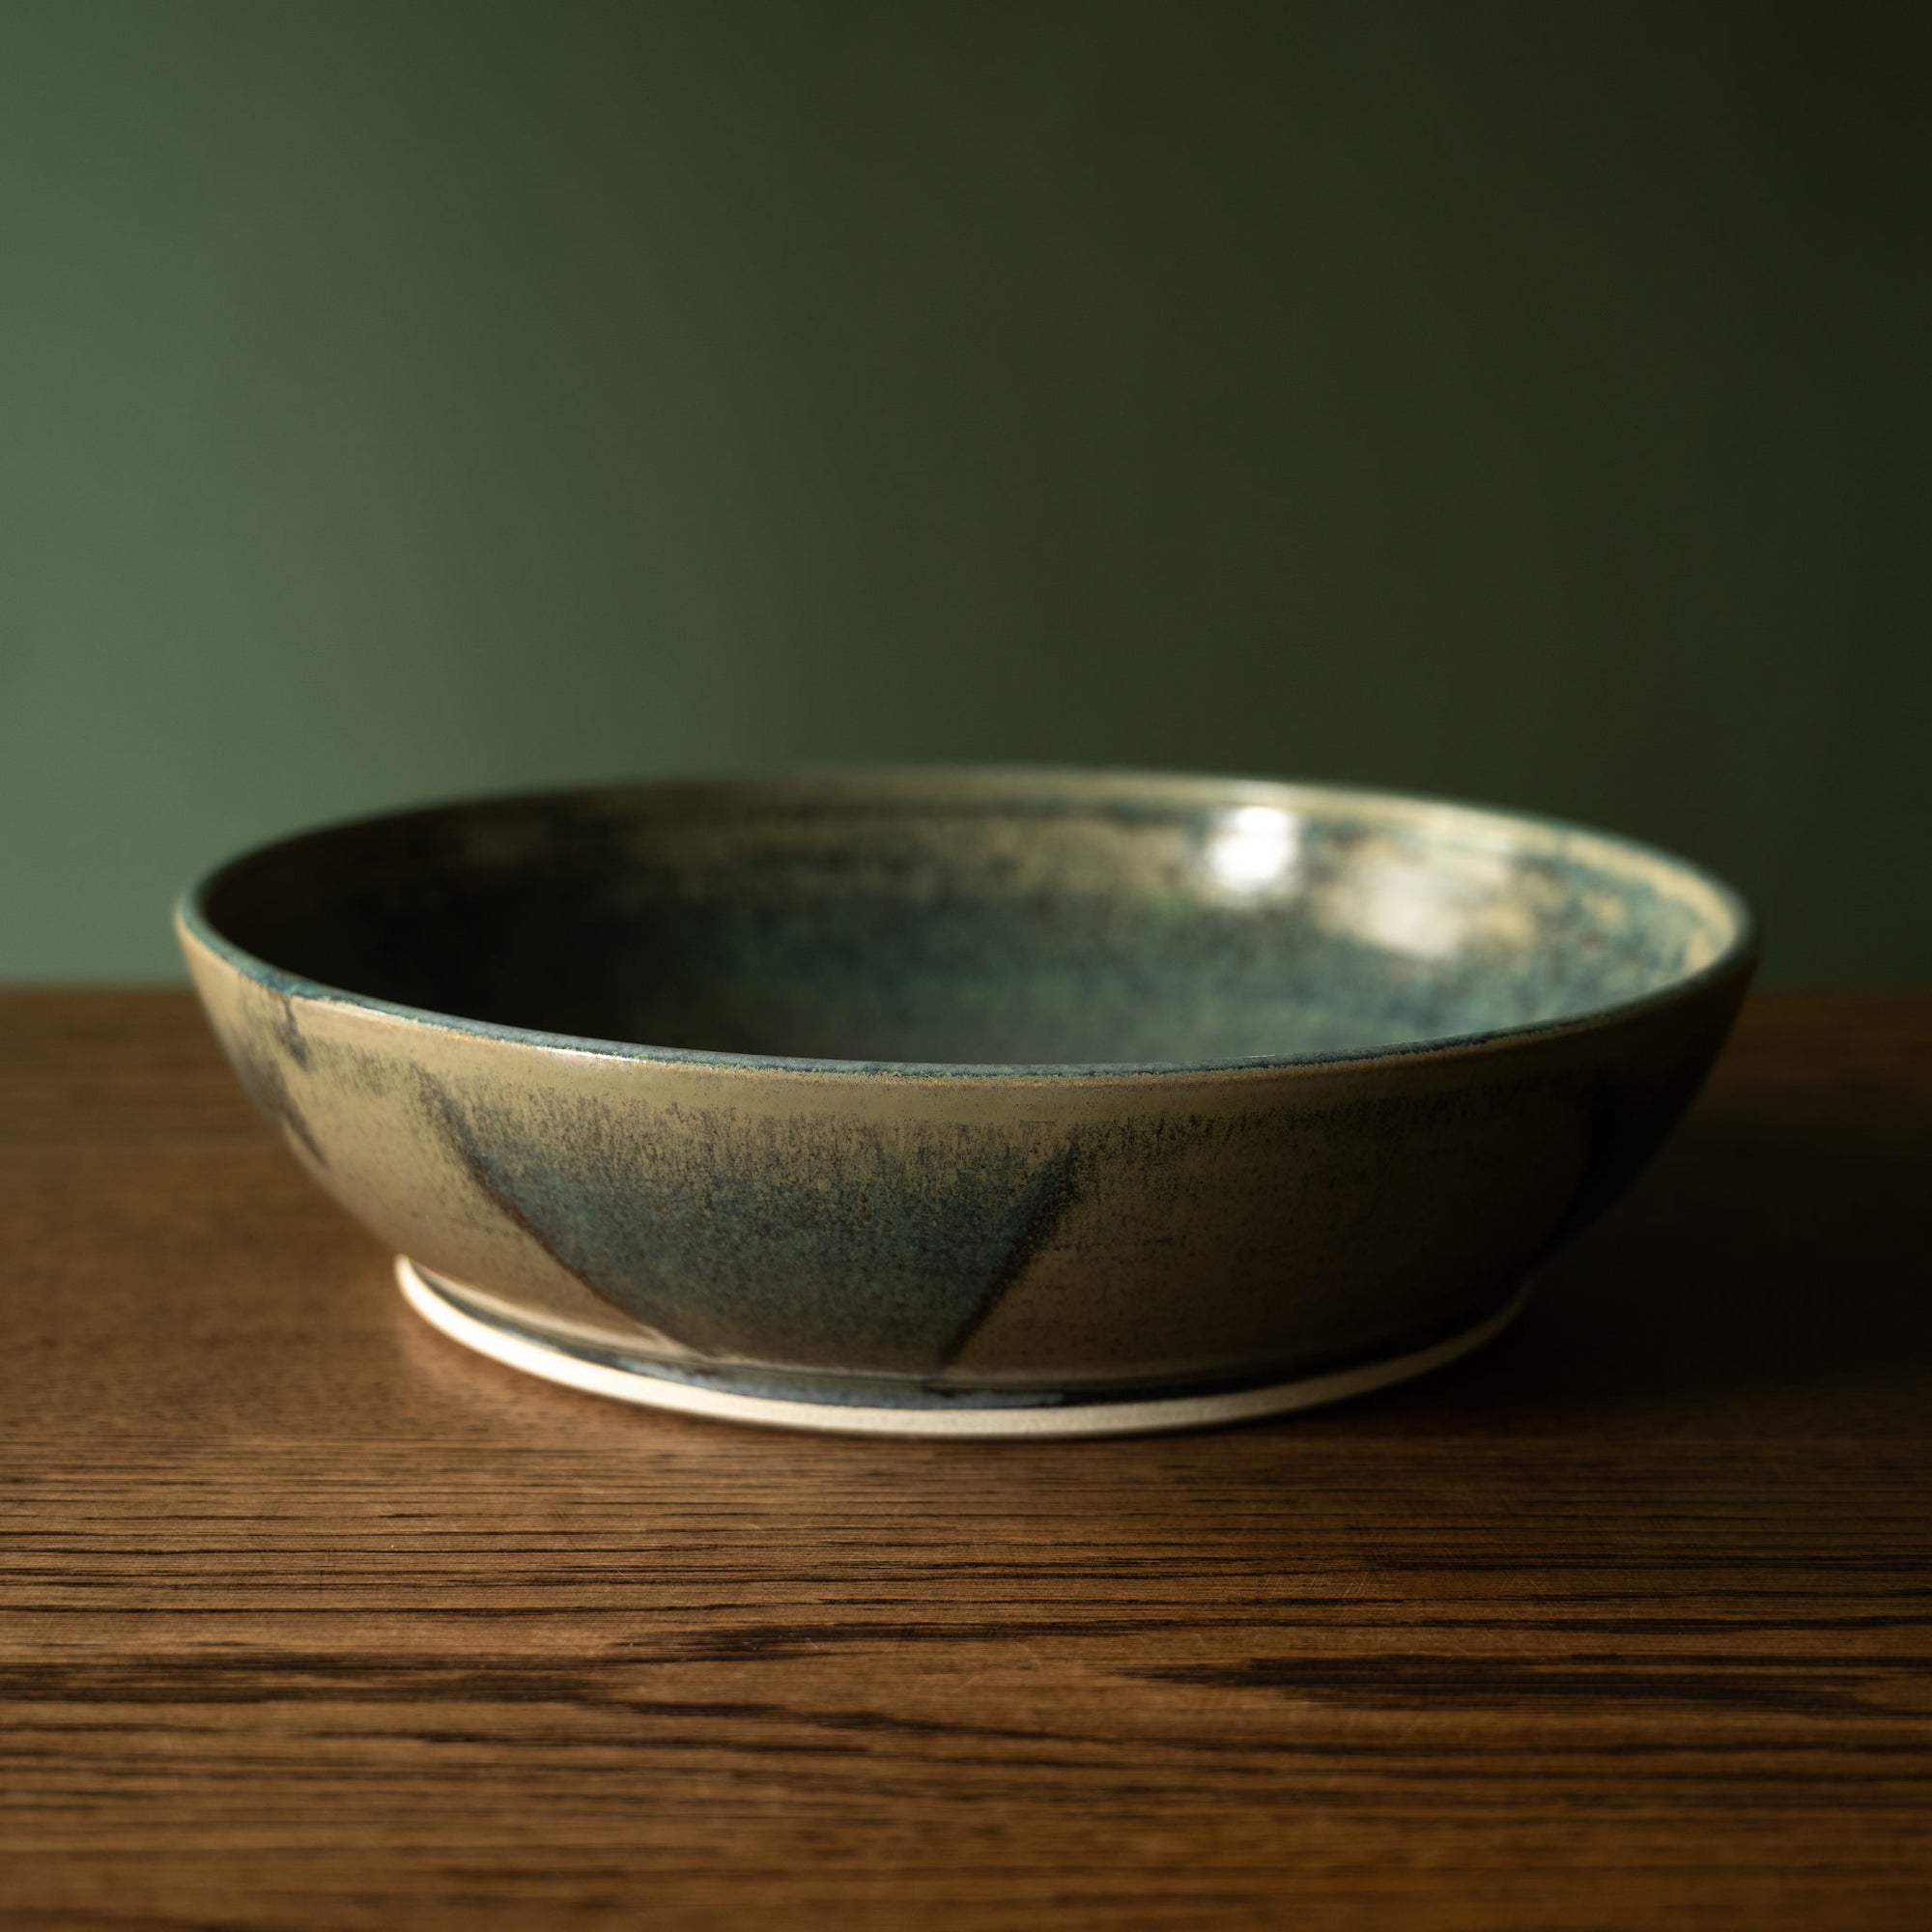 Pottery West Stoneware Serving Bowl in Nori glaze